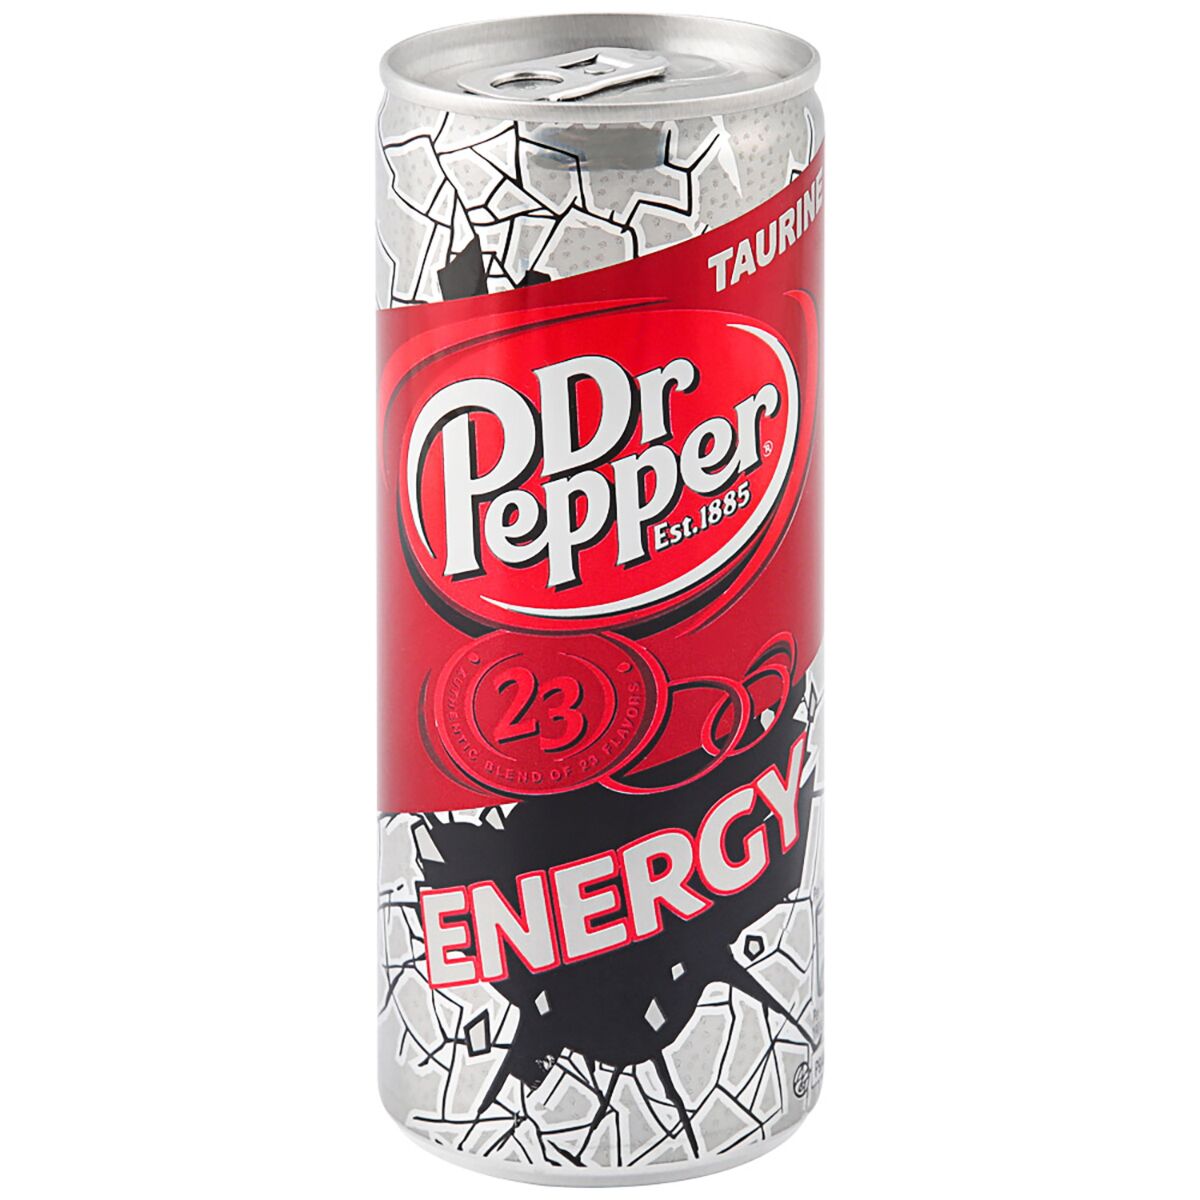 Pepper напиток. Напиток доктор Пеппер Энерджи. Напиток Dr. Pepper сильногазированный. Доктор Пеппер Польша Энерджи. Напиток "Dr.Pepper" (ж/б) 0.33 л.